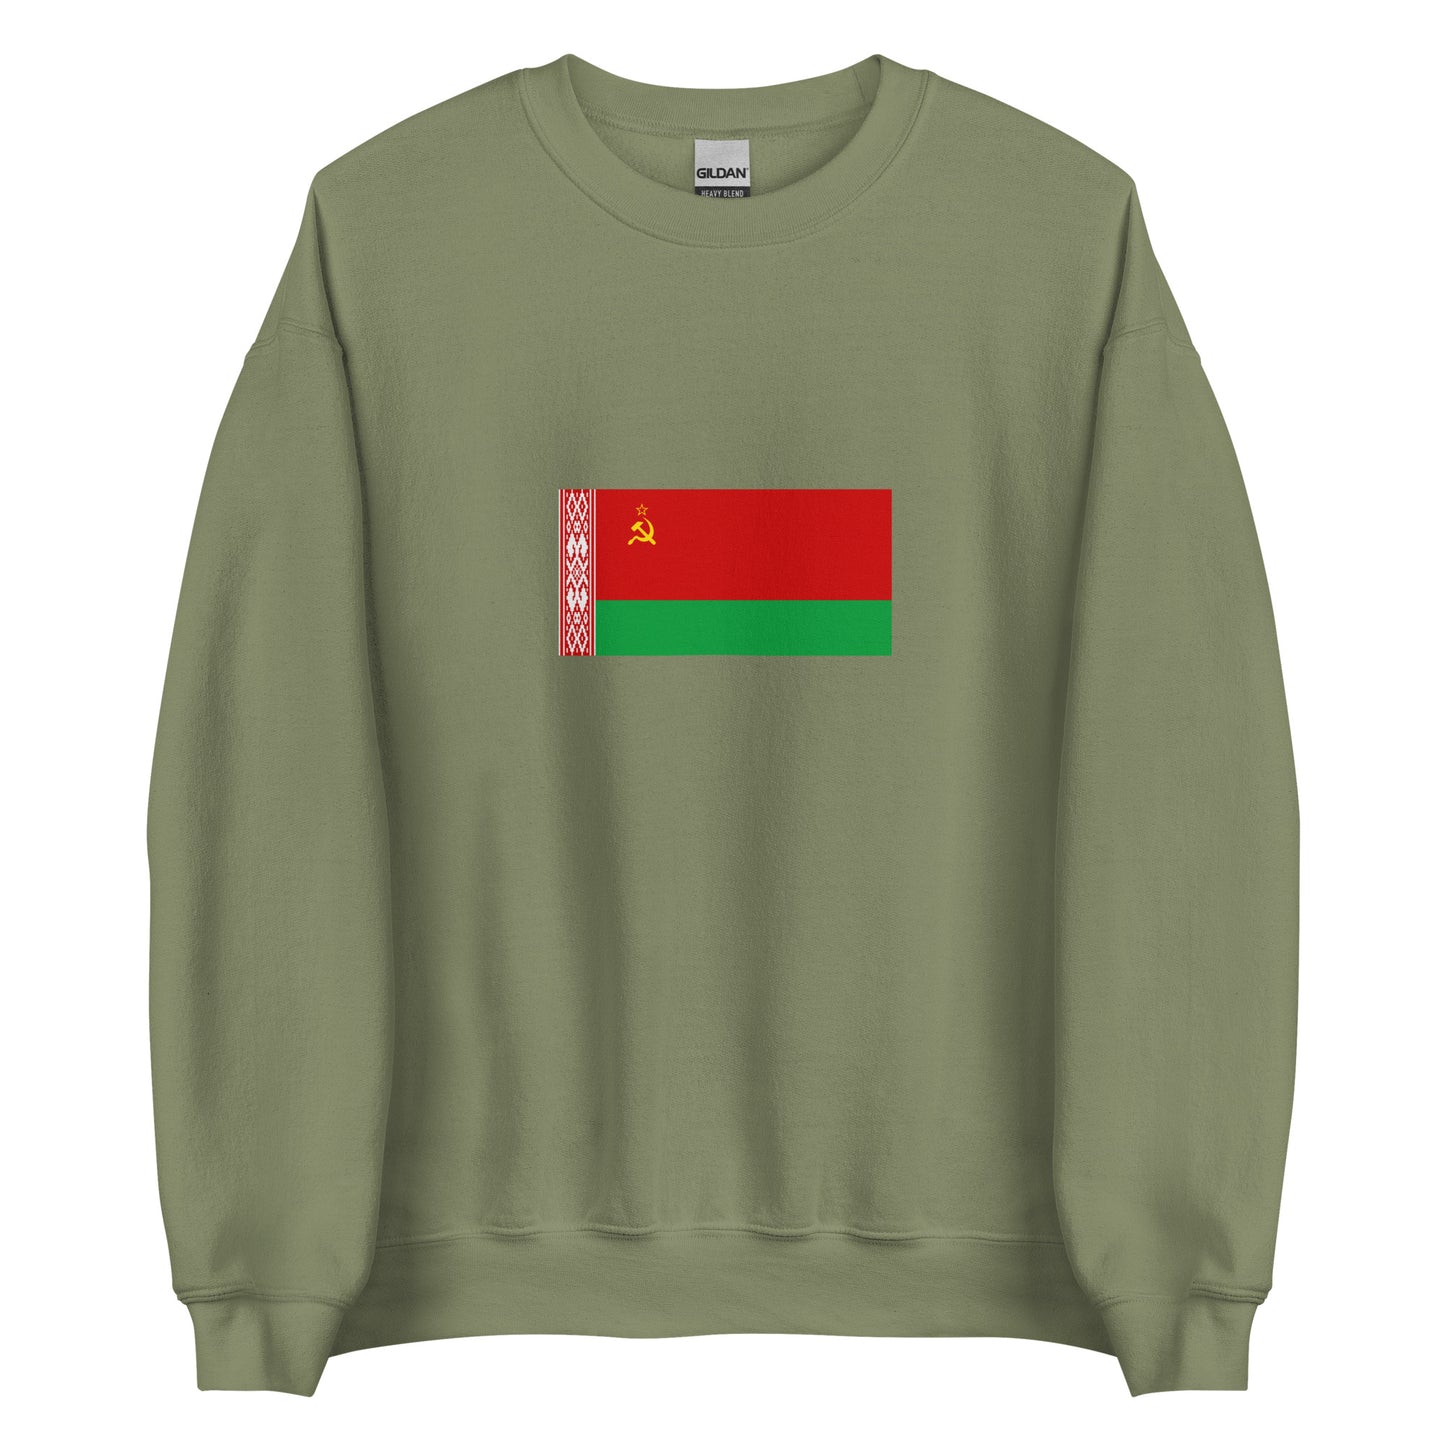 Belarus - Byelarussian Soviet Social Republic (1951 - 1991) | Historical Flag Unisex Sweatshirt